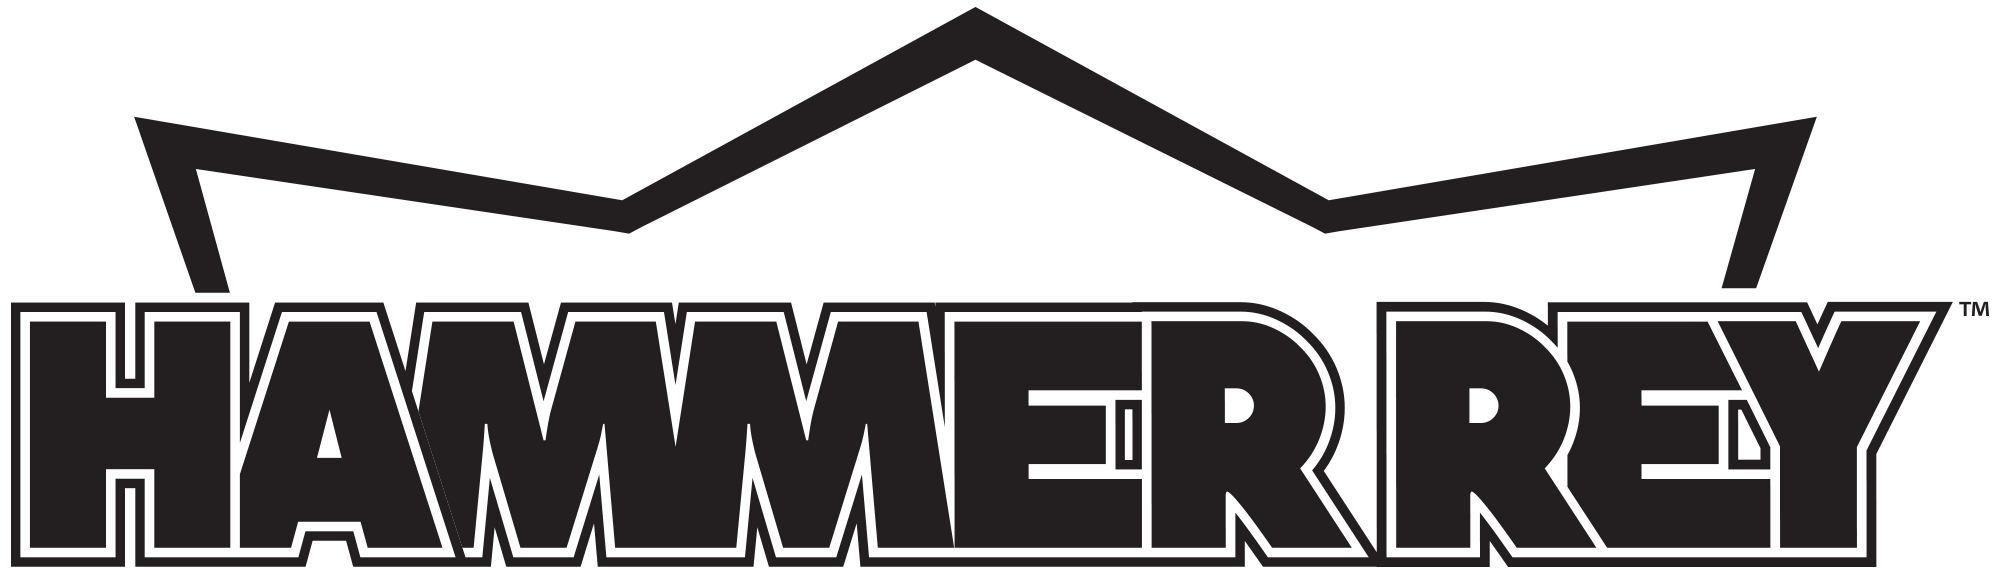 Hammer REY logo